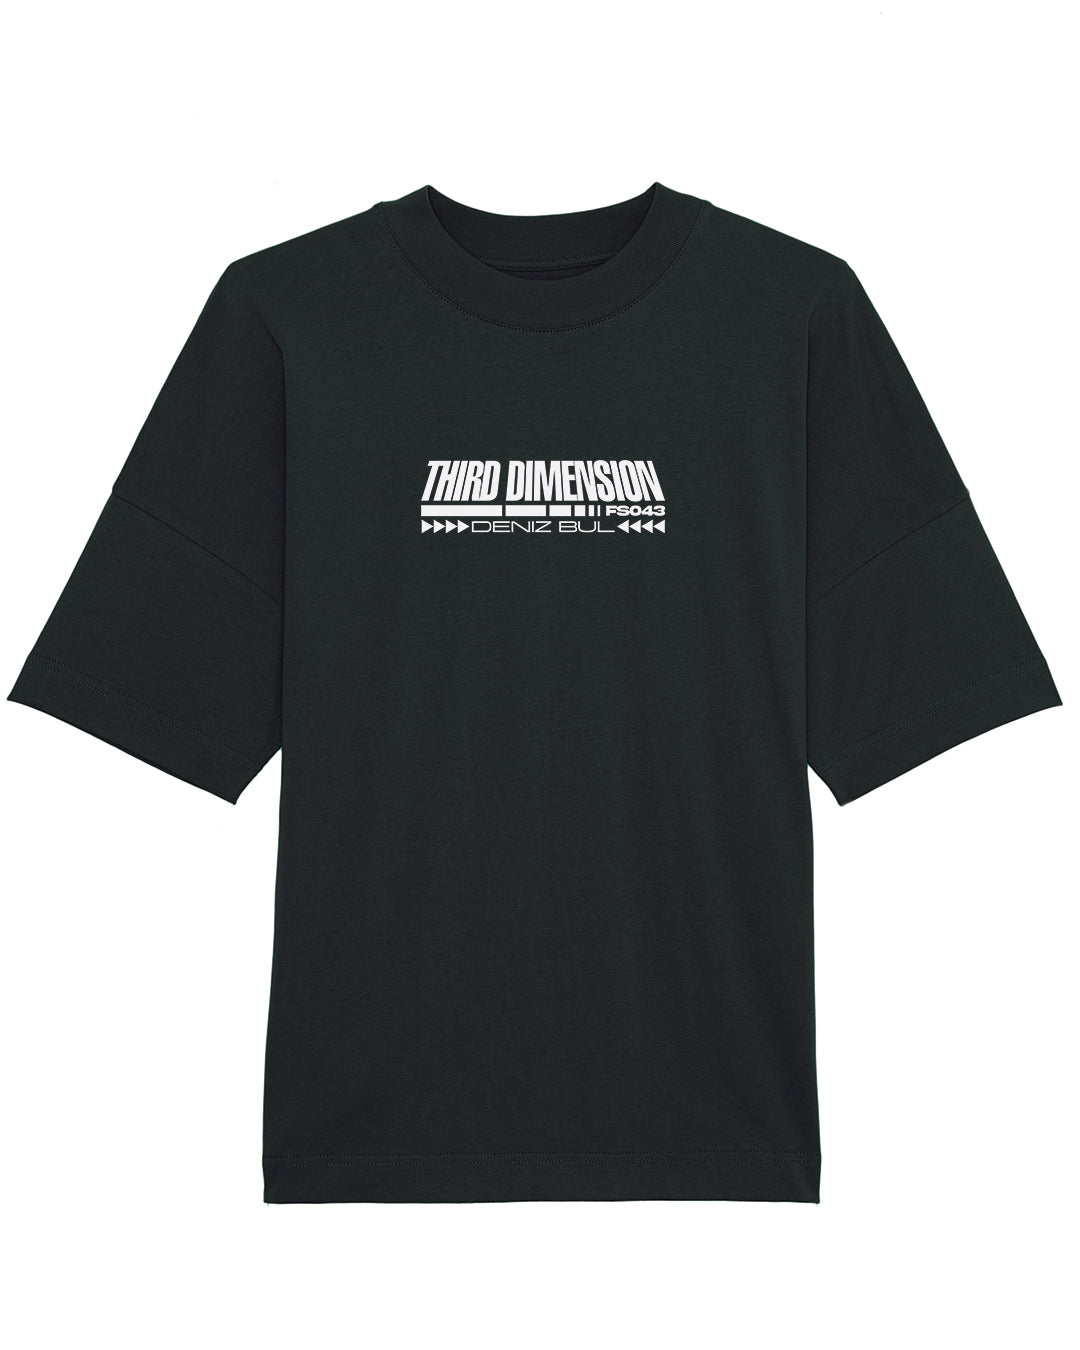 Deniz Bul - Third Dimension Oversized T-Shirt, black , front